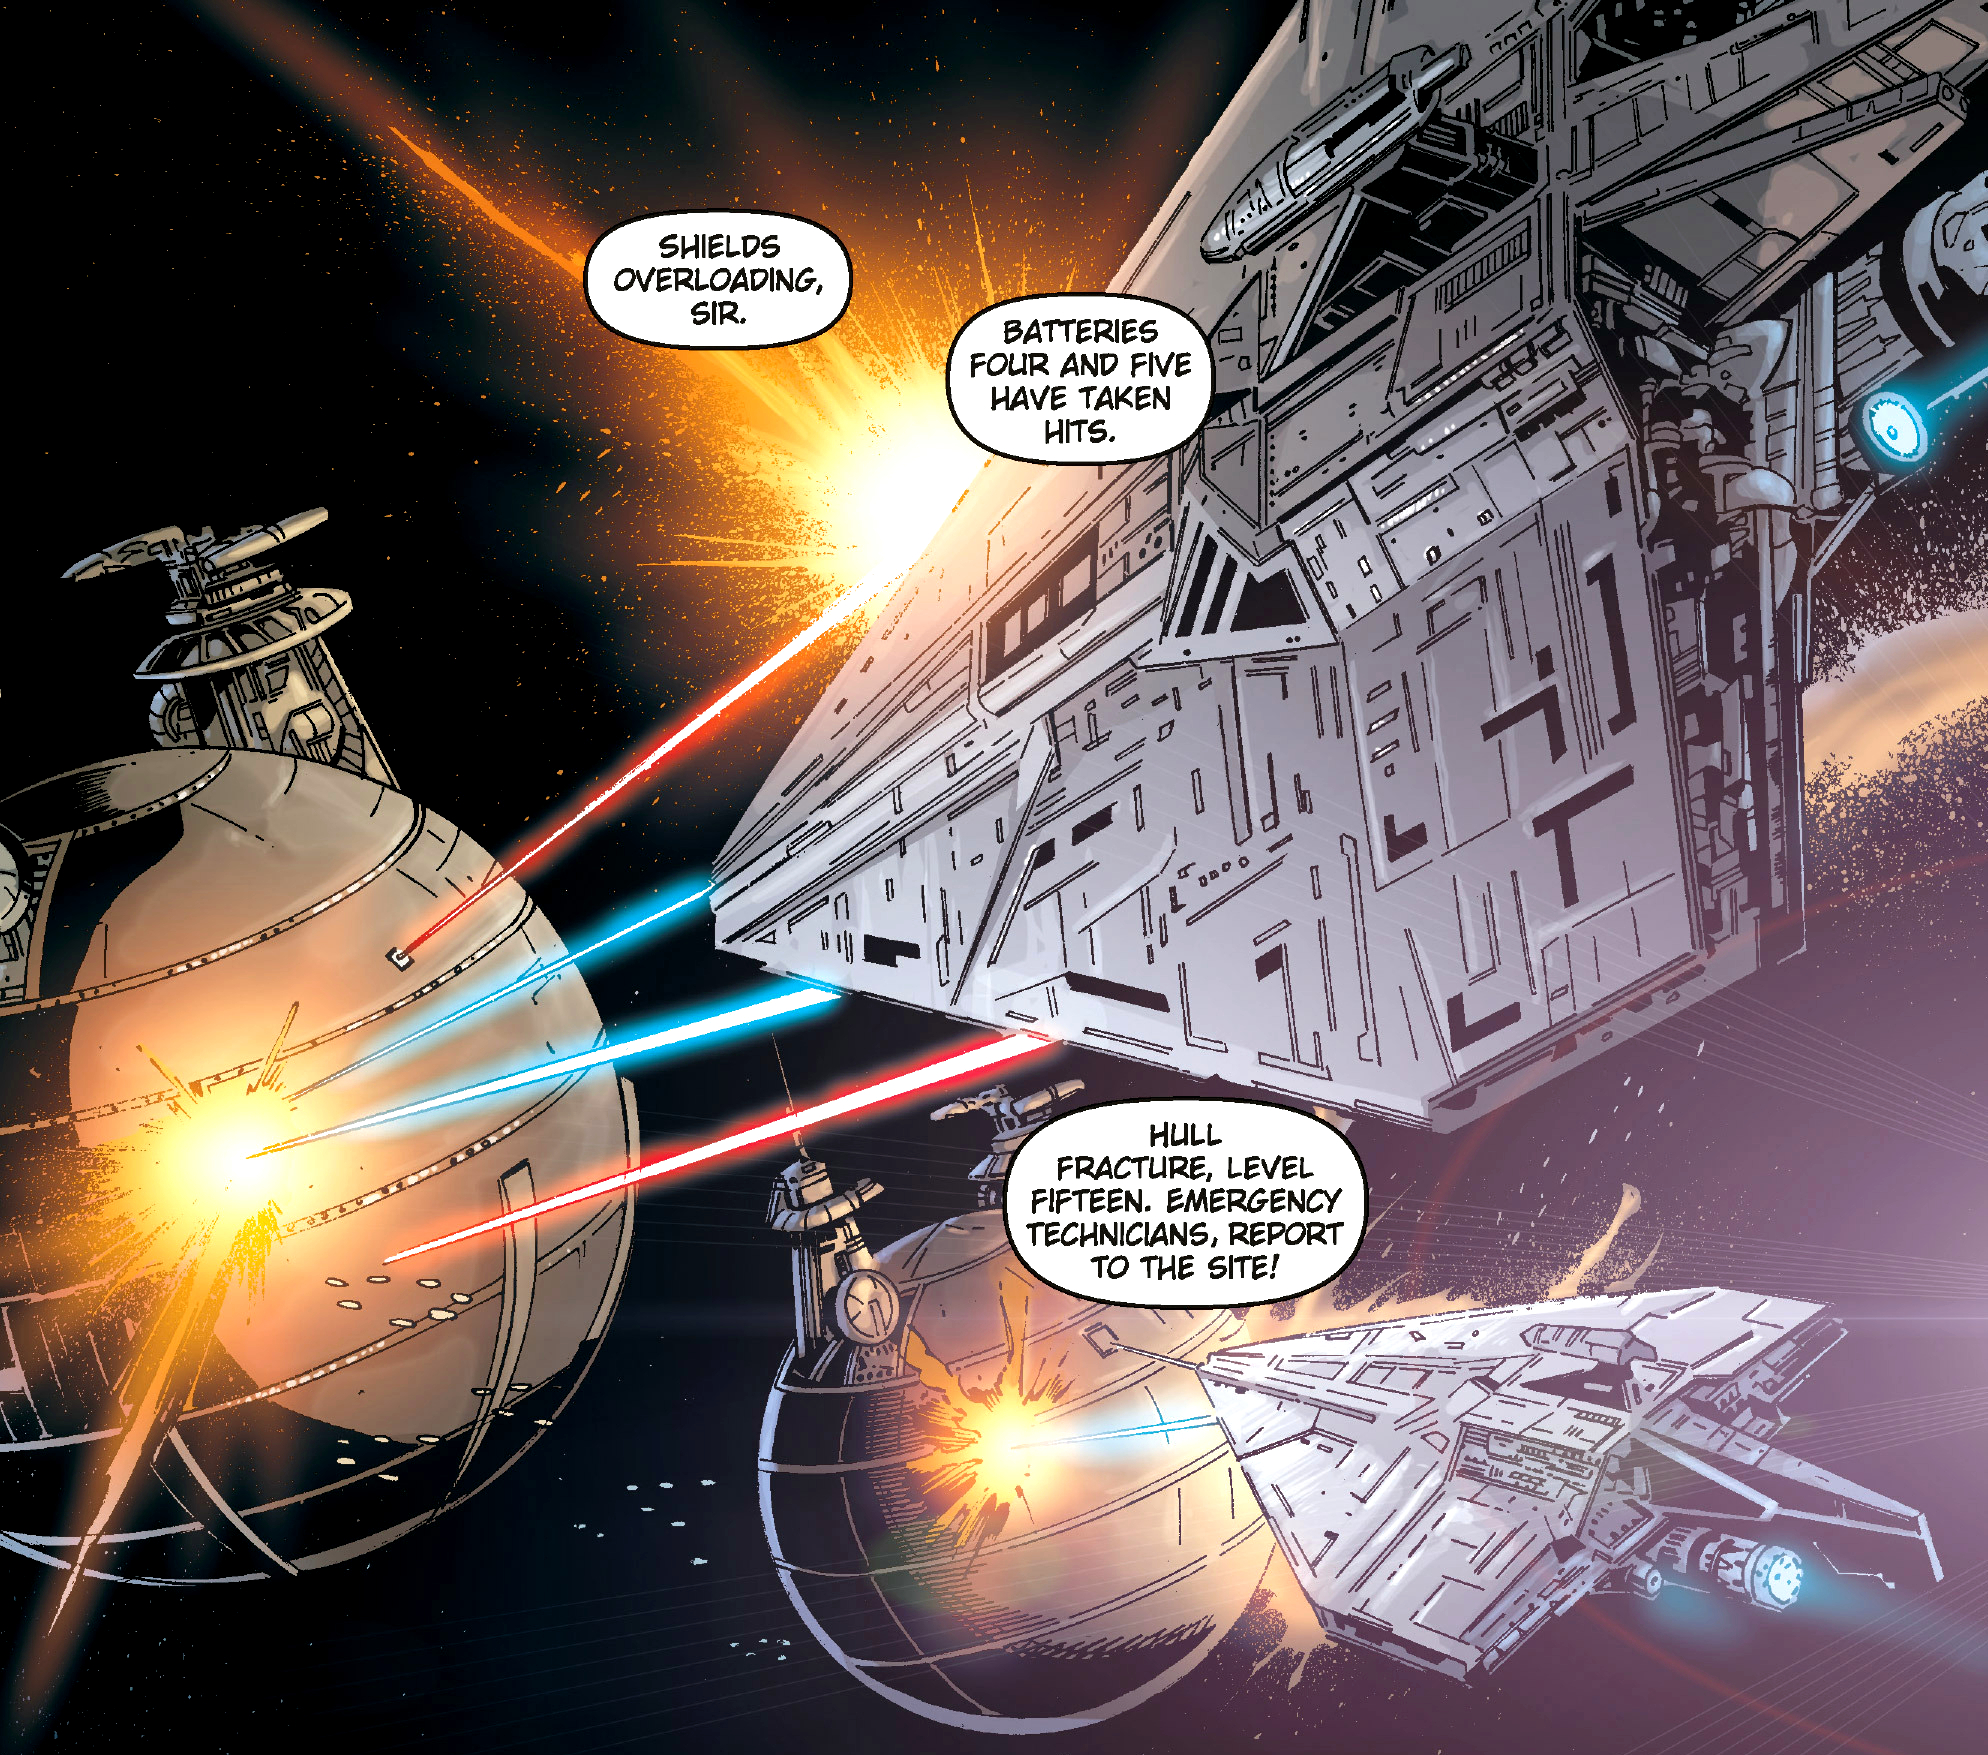 star wars rebels imperial light cruiser